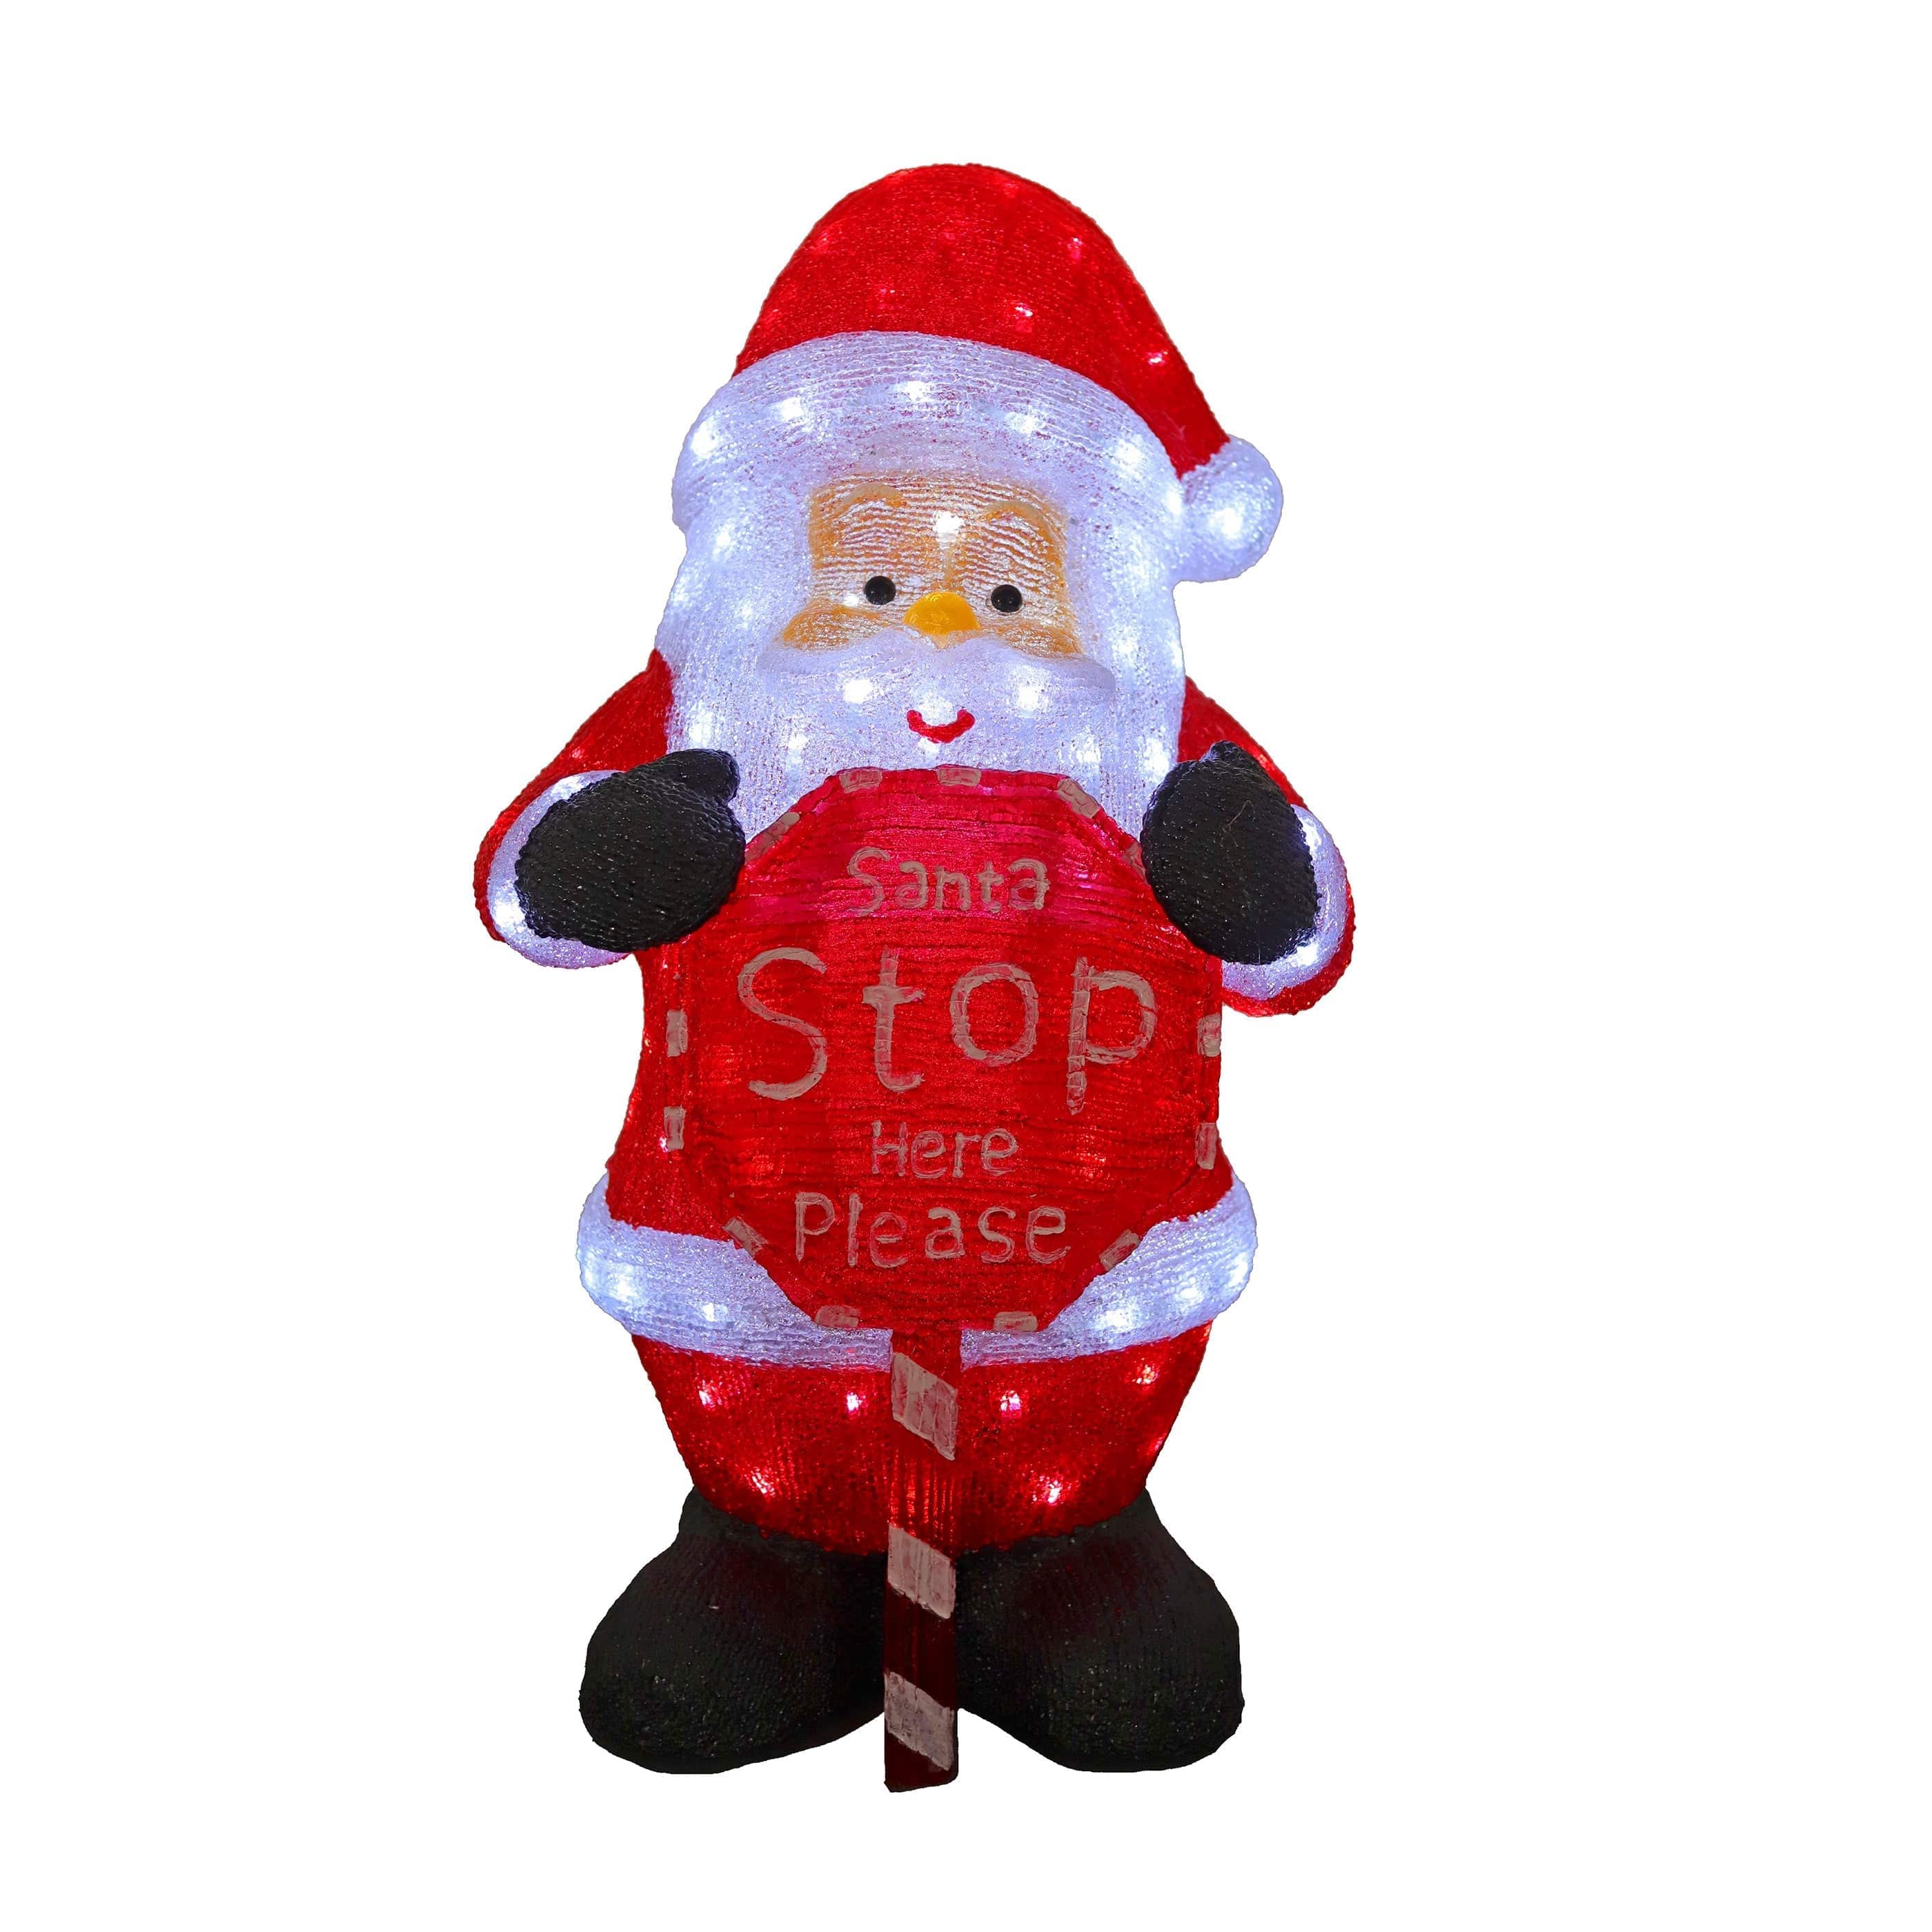 Promo Christmas Figure Acrylic Santa with Santa Stop Here Sign - H80cm ACY005-P